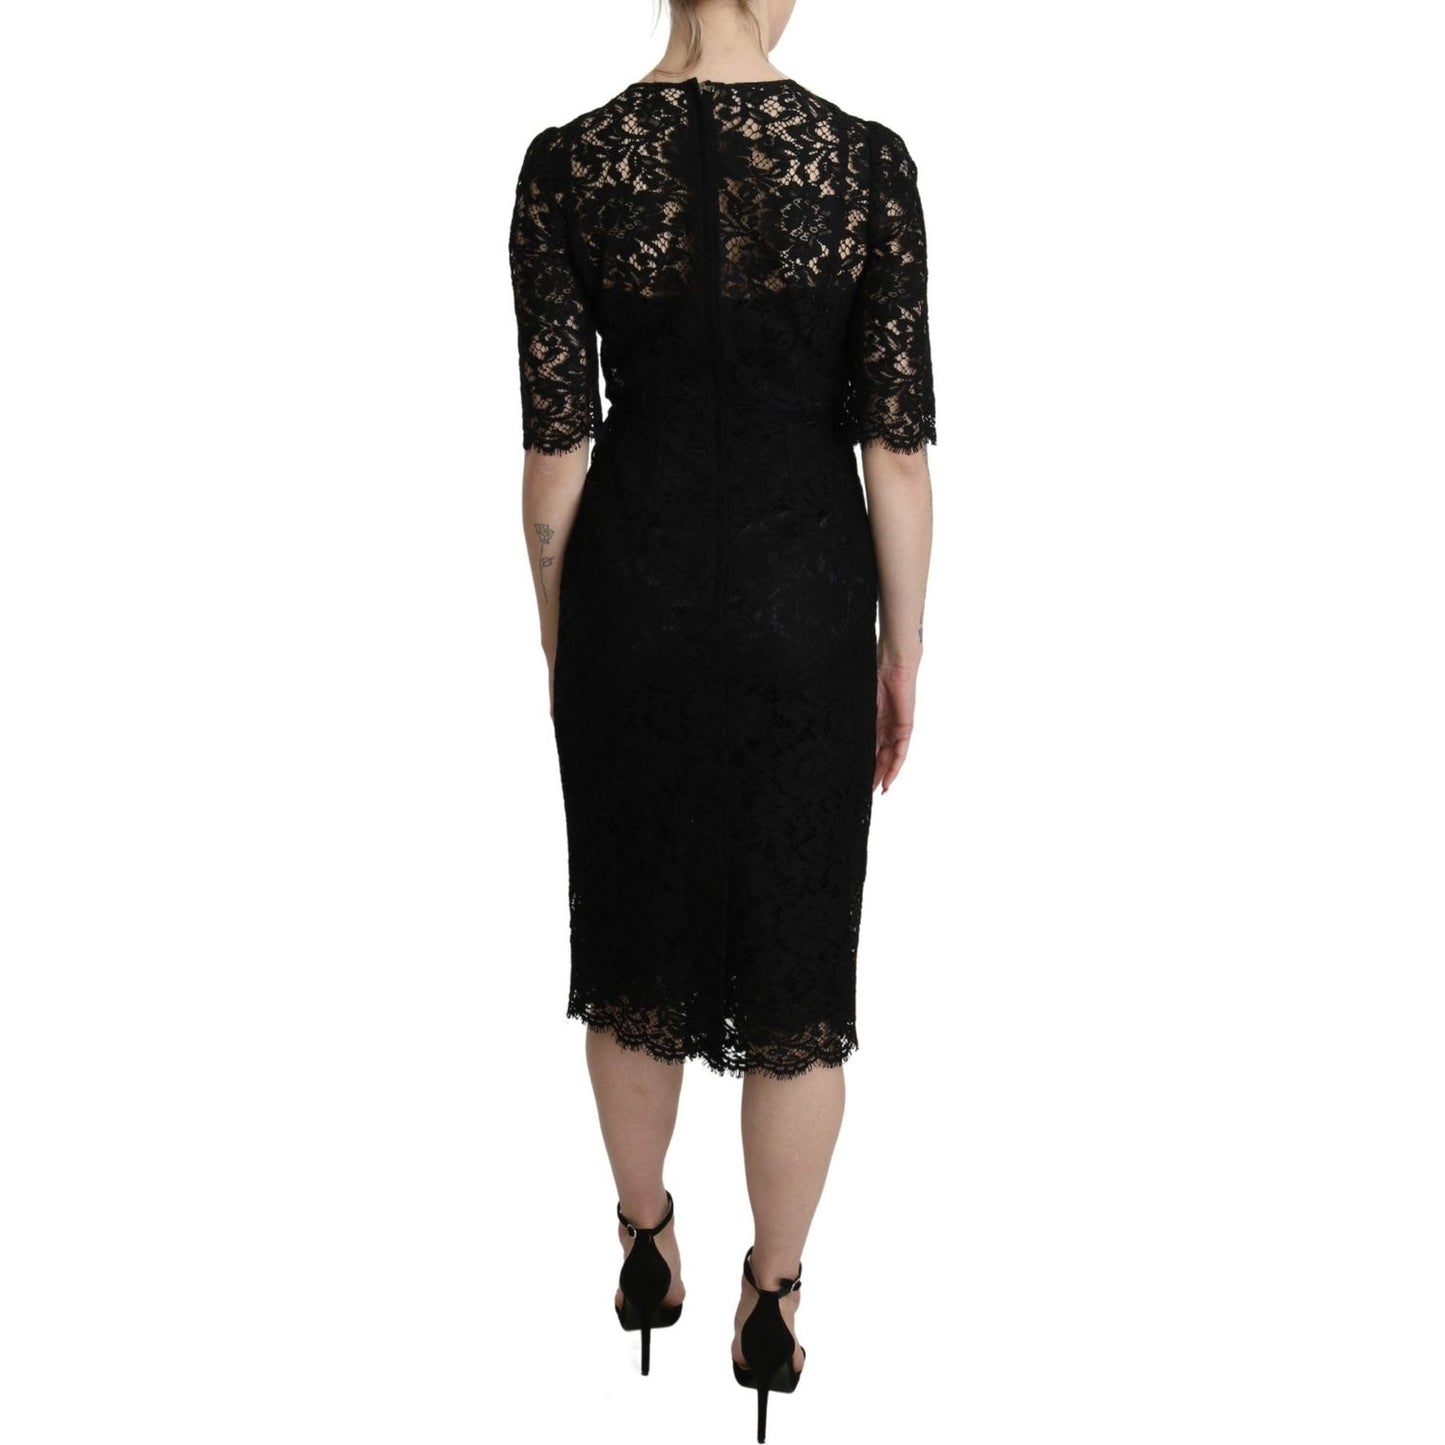 Dolce & Gabbana Elegant Black Lace Sheath Knee-Length Dress black-floral-lace-sheath-knee-length-dress